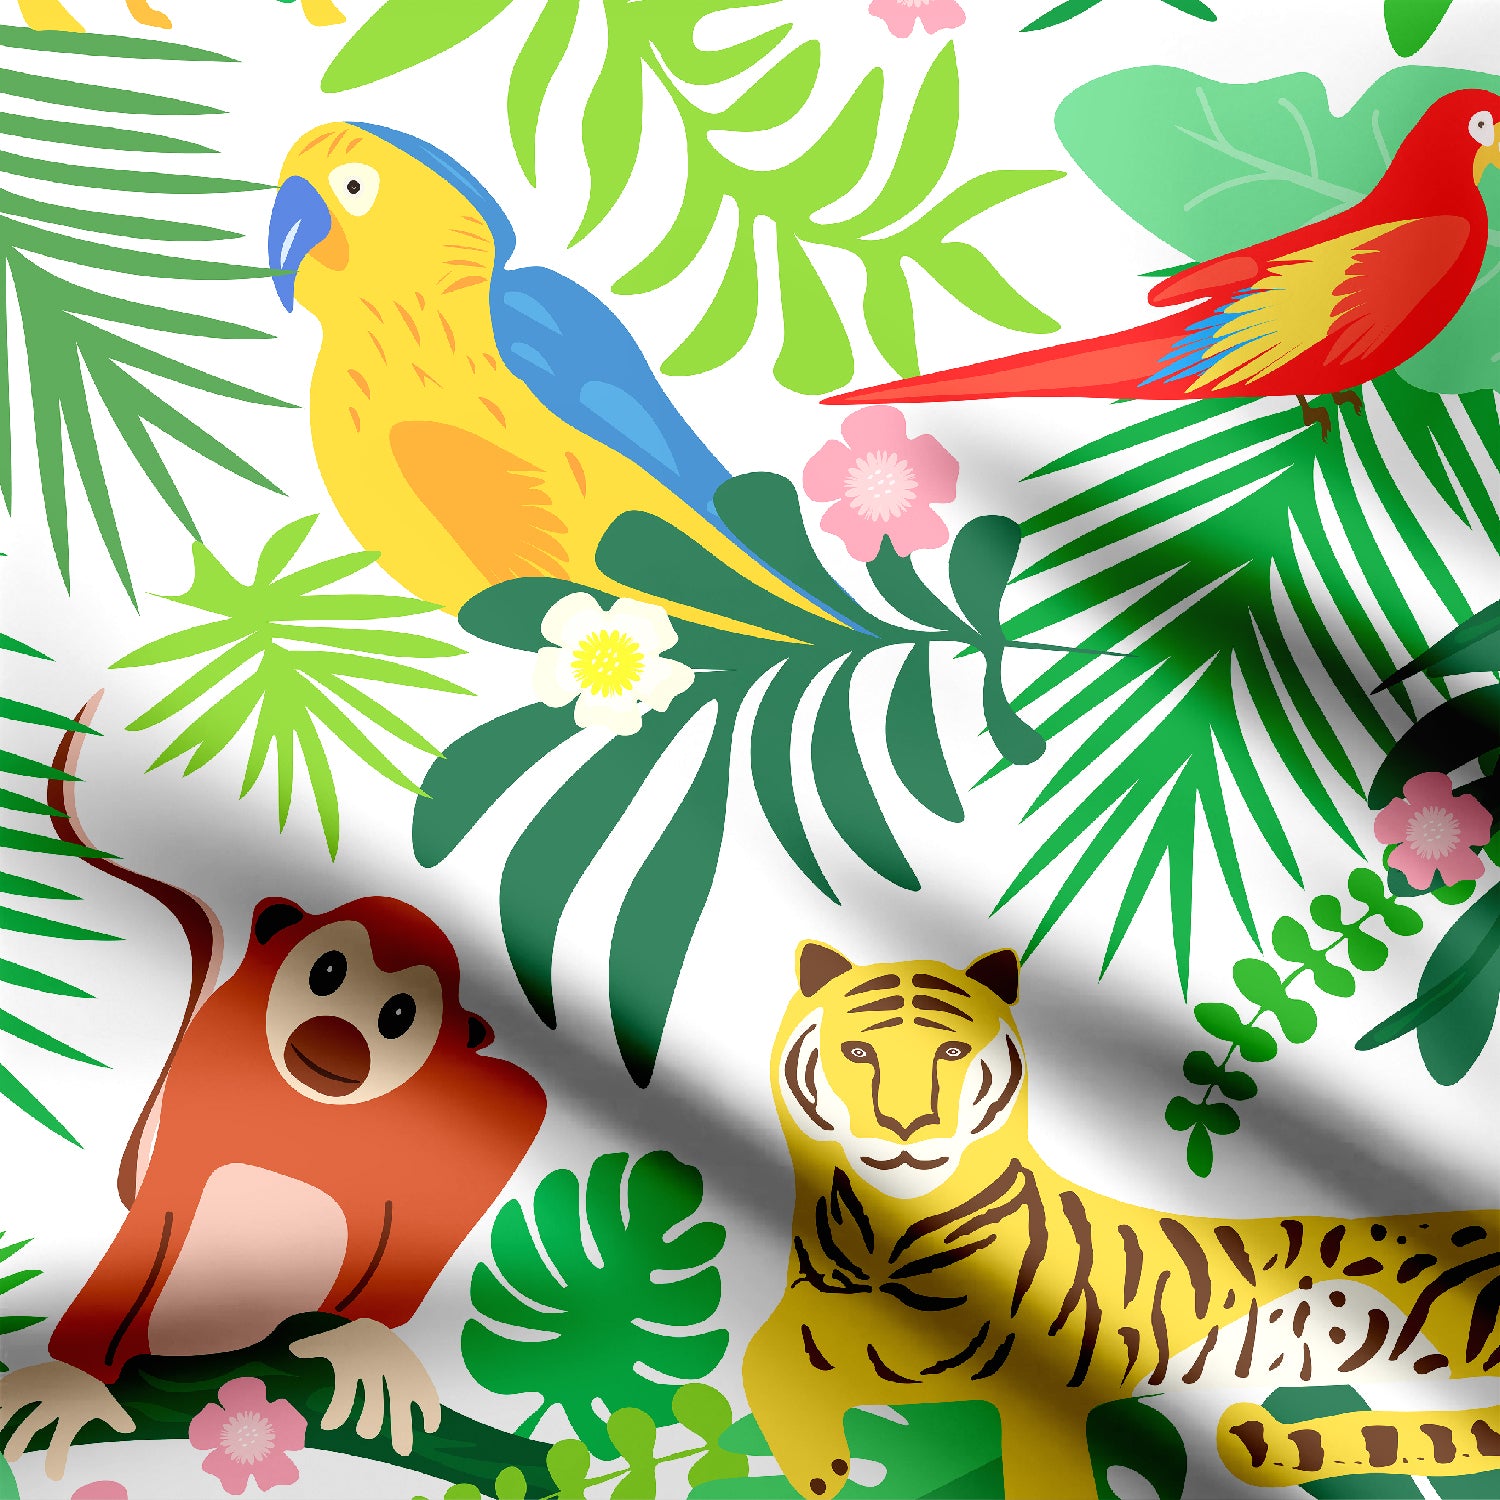 Fun Joyful Jungle Animals on White